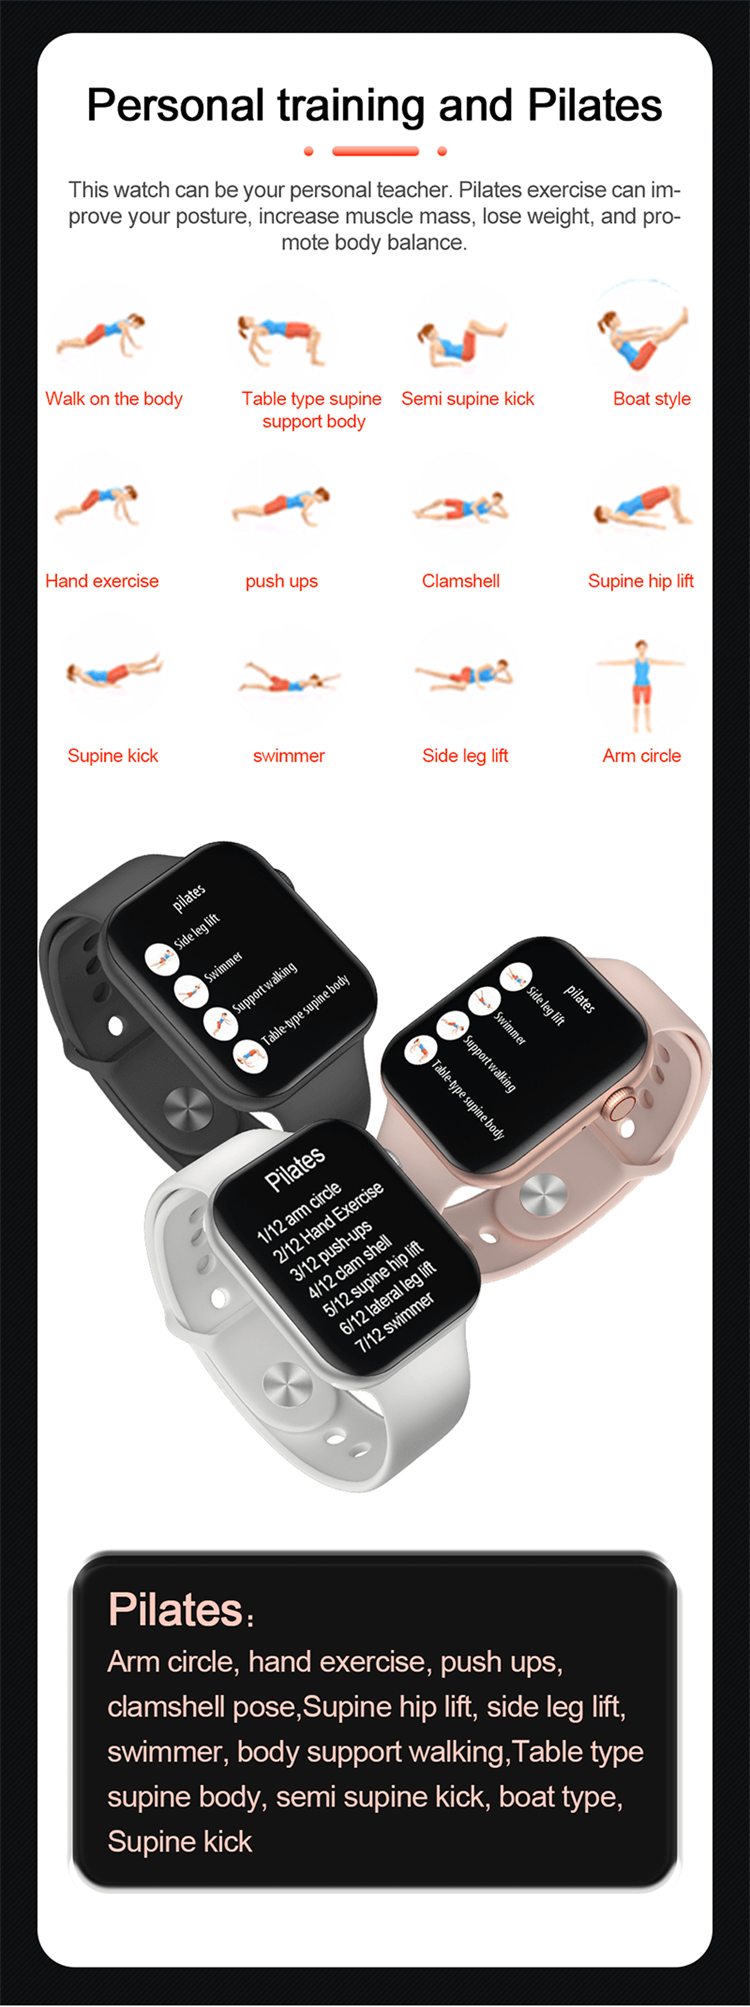 FK78 Smartwatch Product Details-Shenzhen Shengye Technology Co.,Ltd